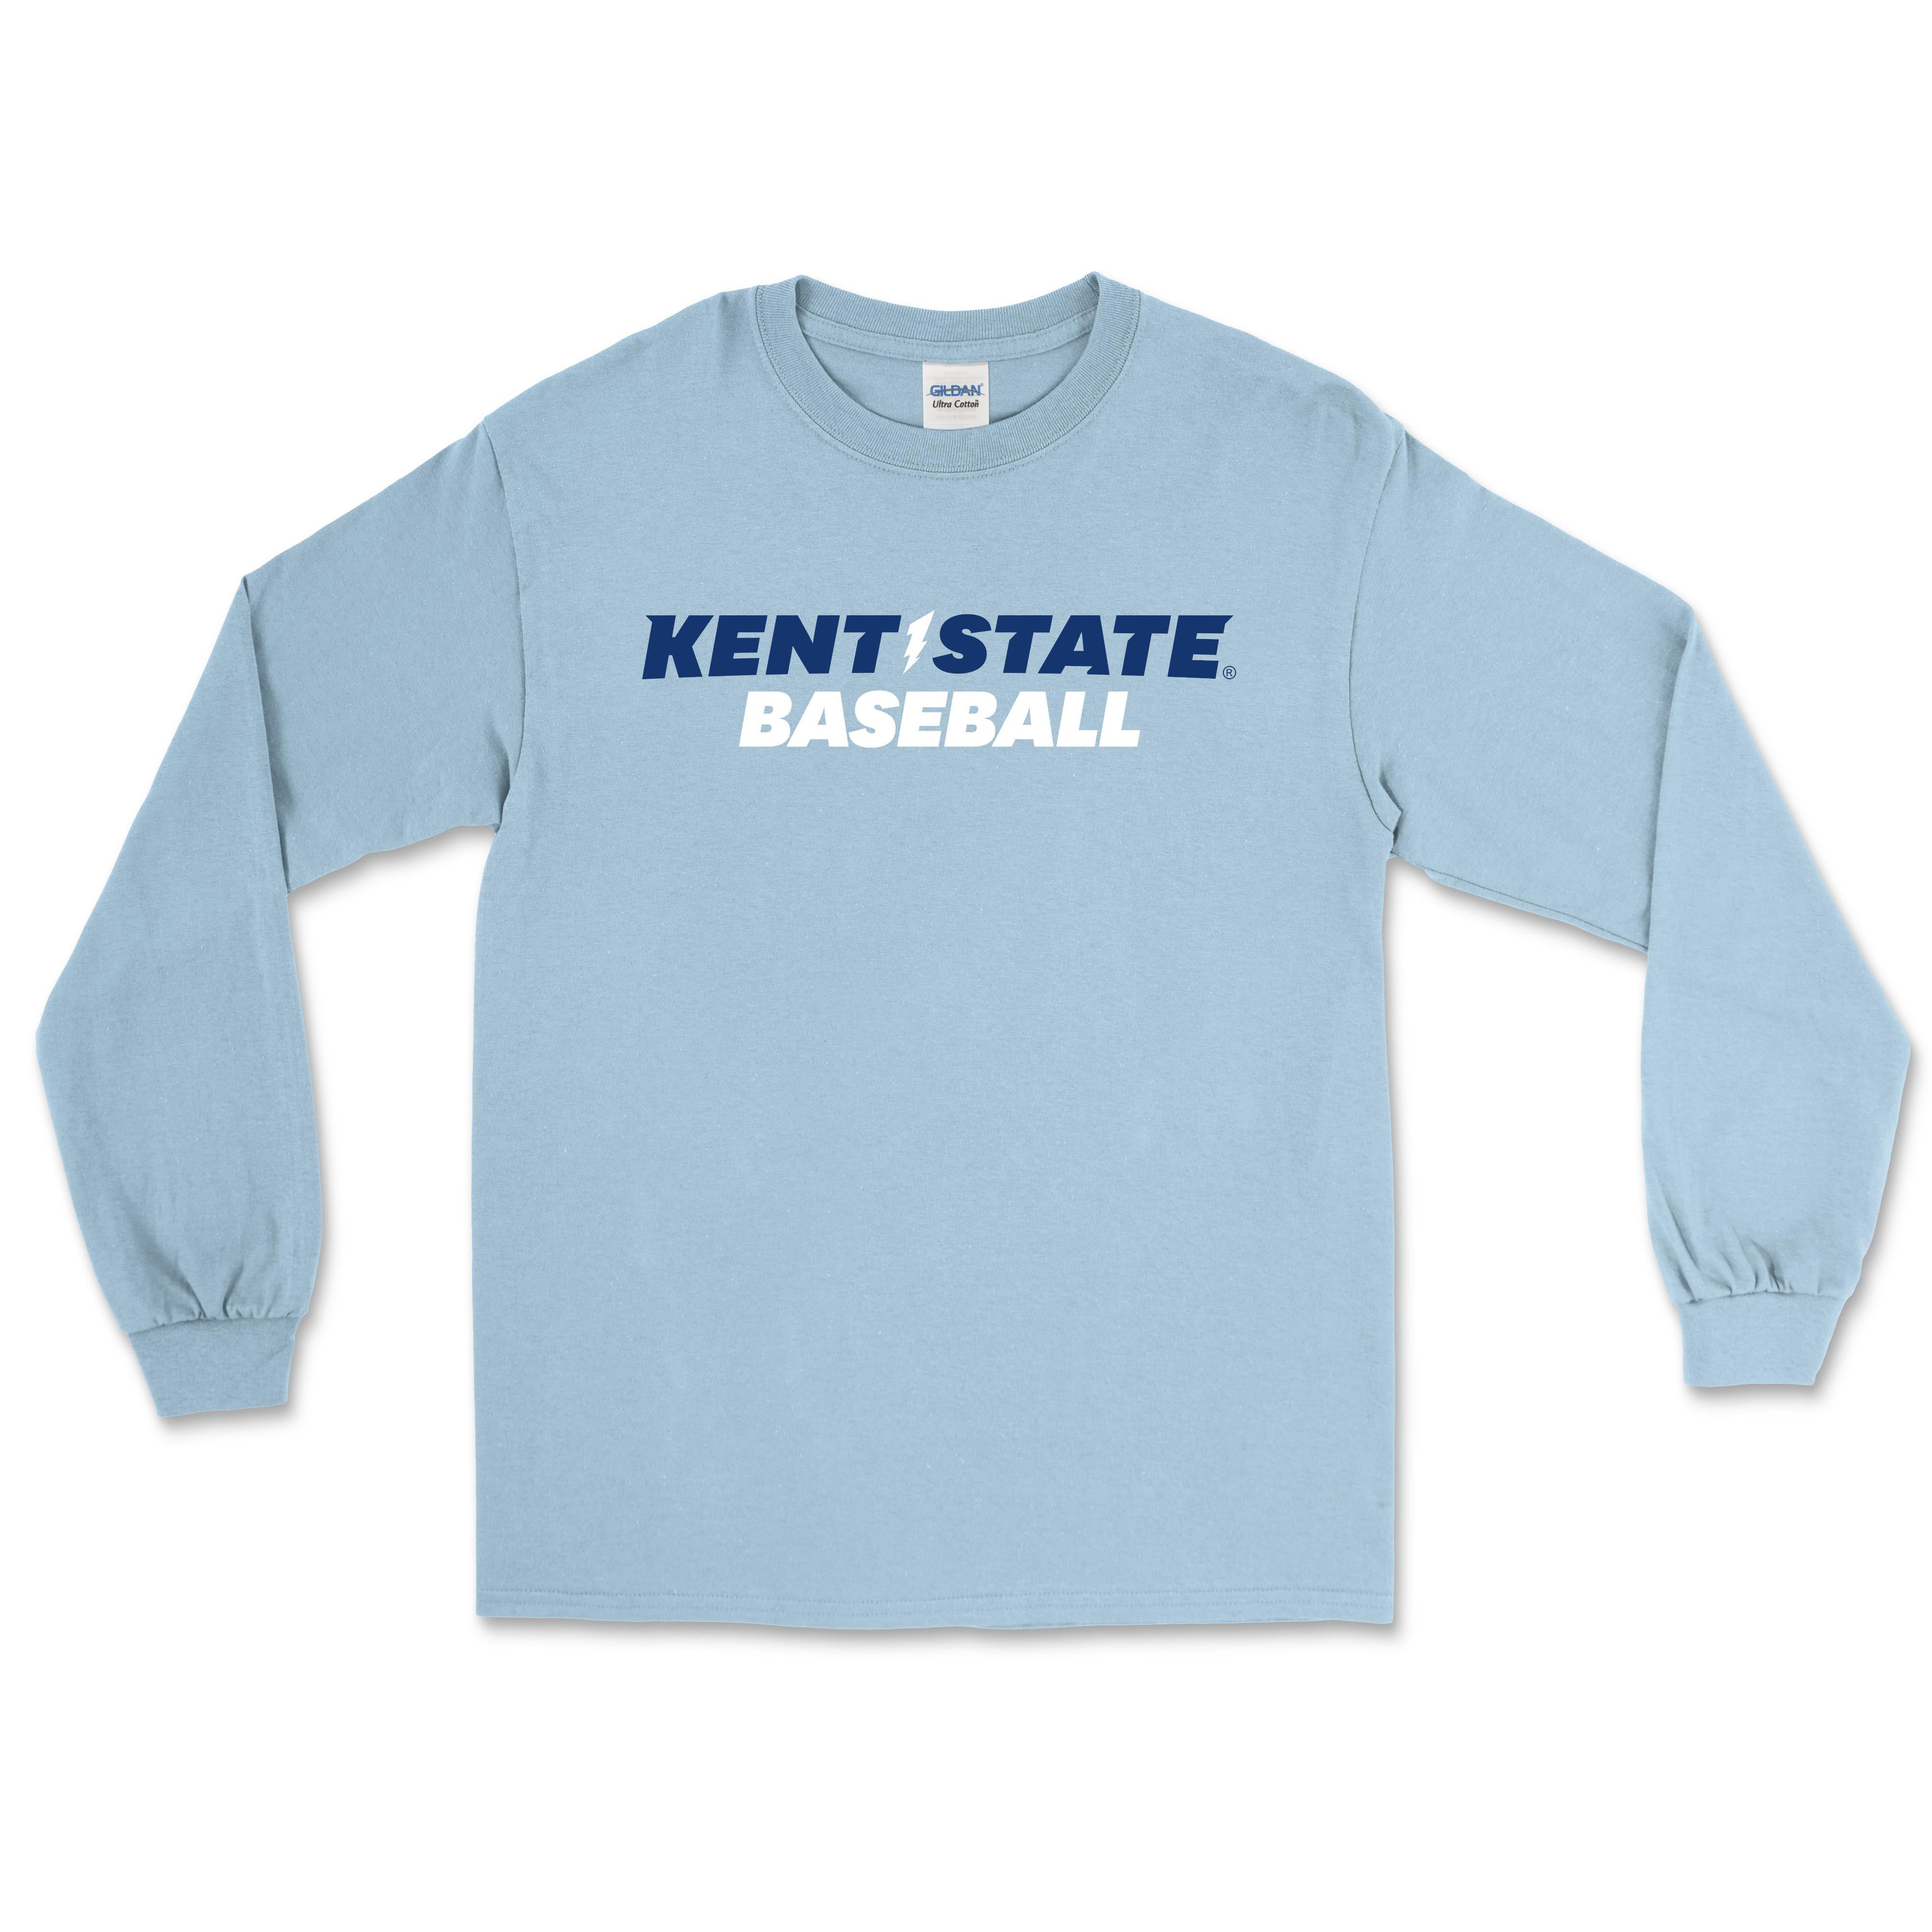 Kent State Light Blue Baseball Crewneck Sweatshirt